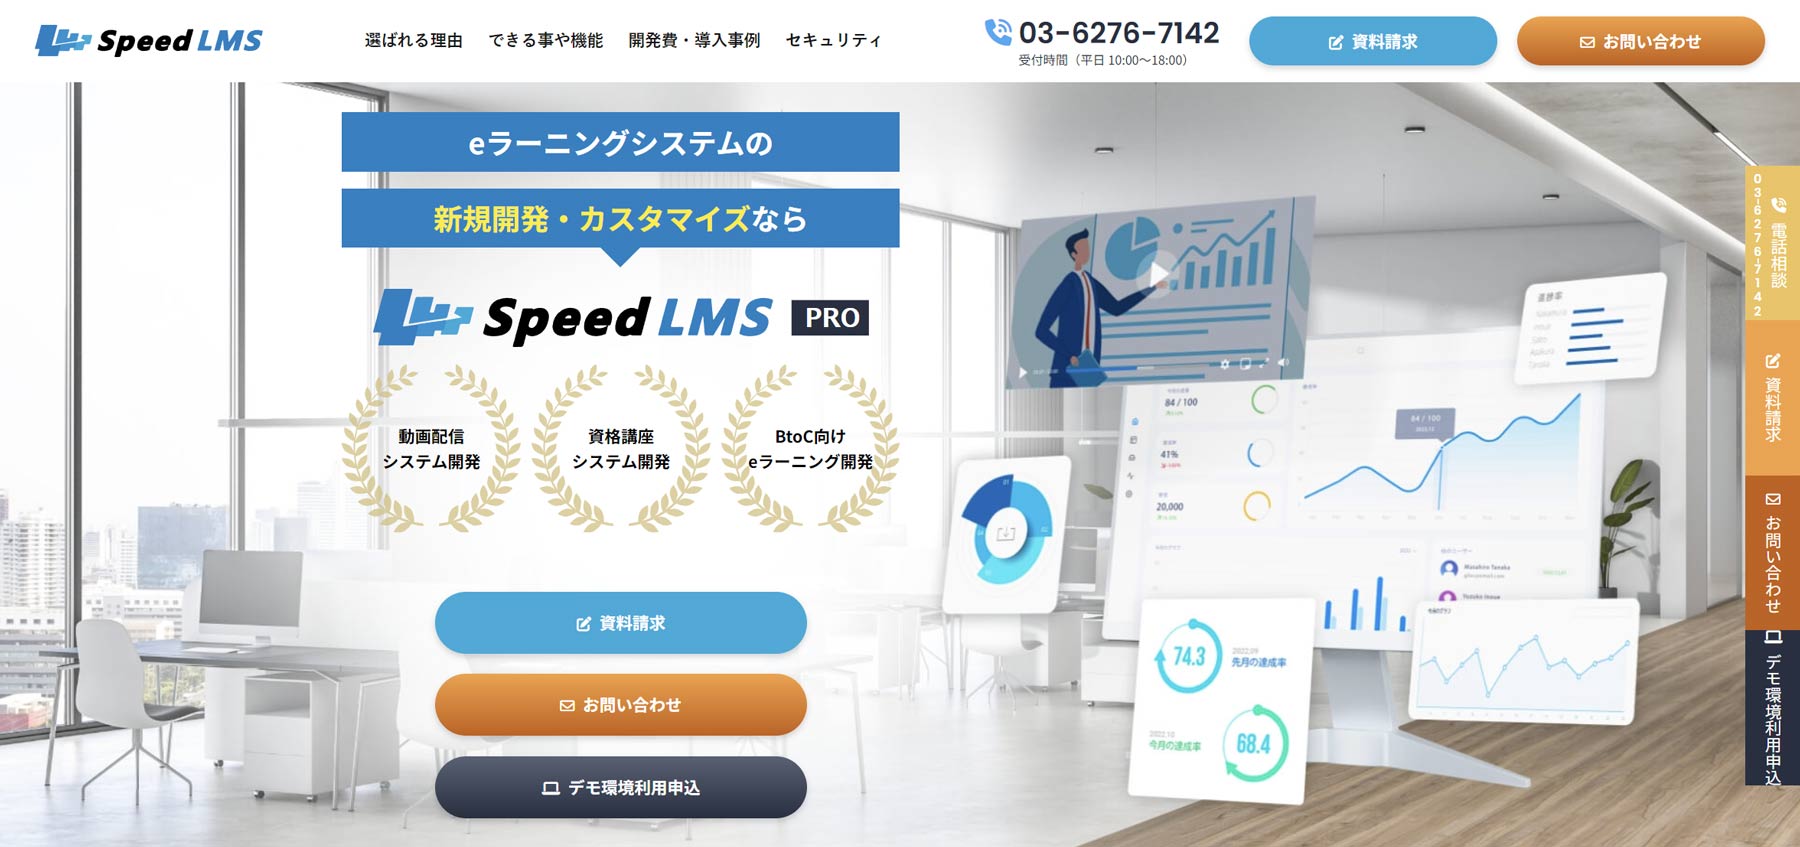 SpeedLMS Pro公式Webサイト